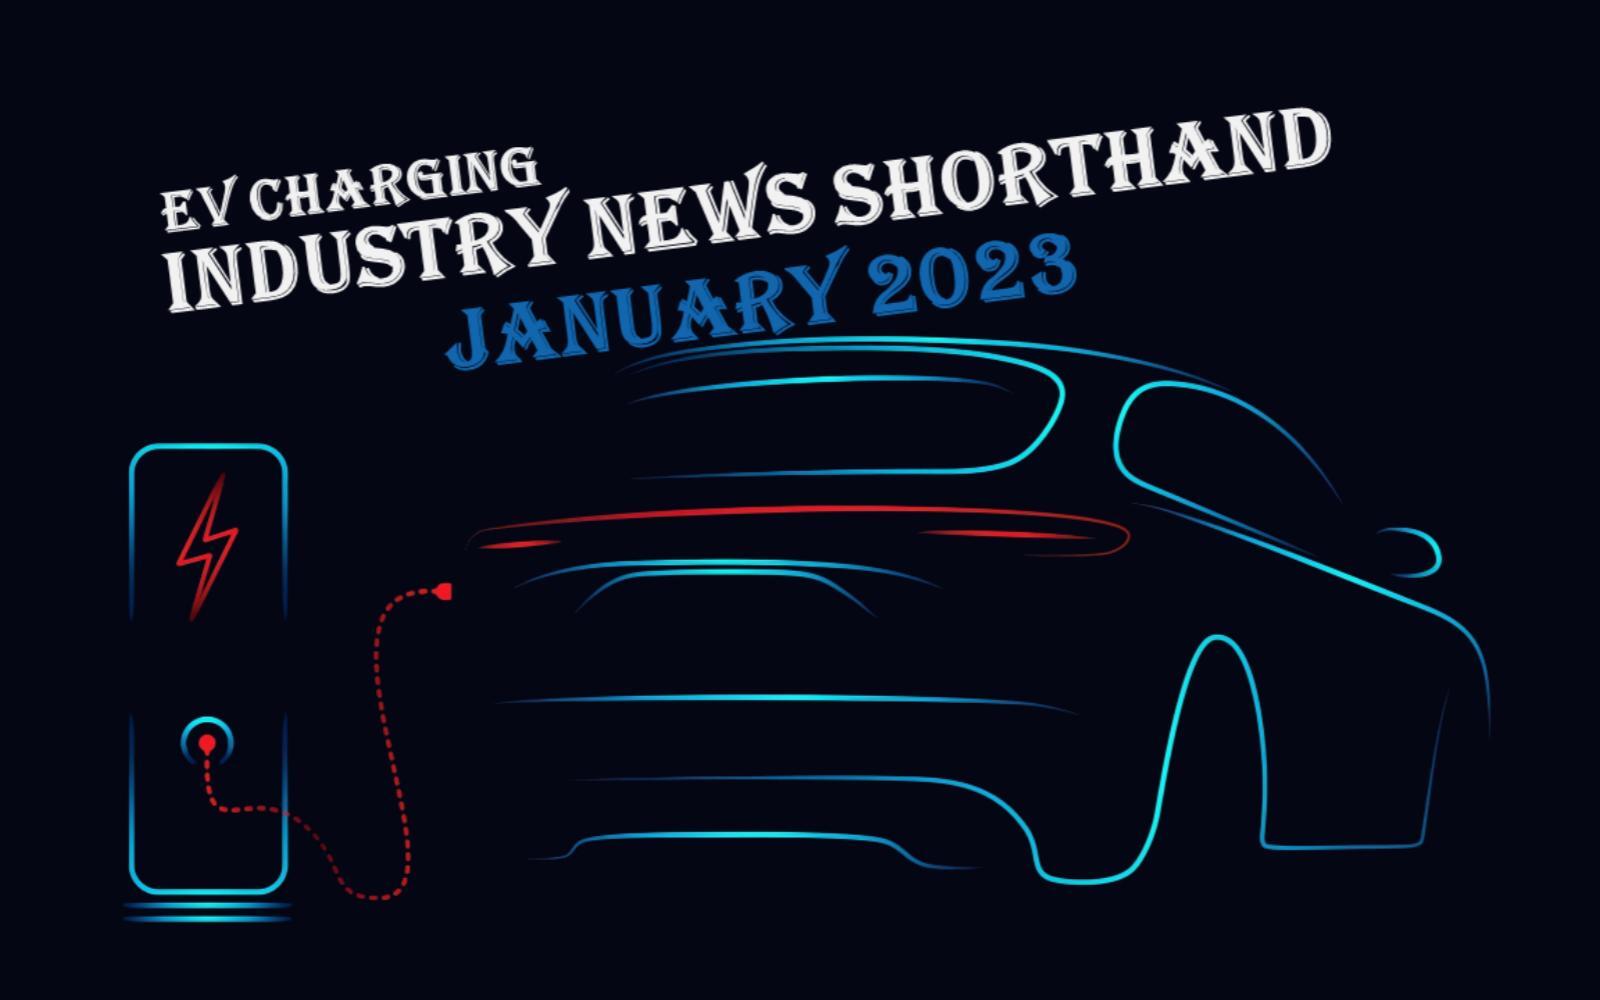 January 2023 EV charging industry news summary